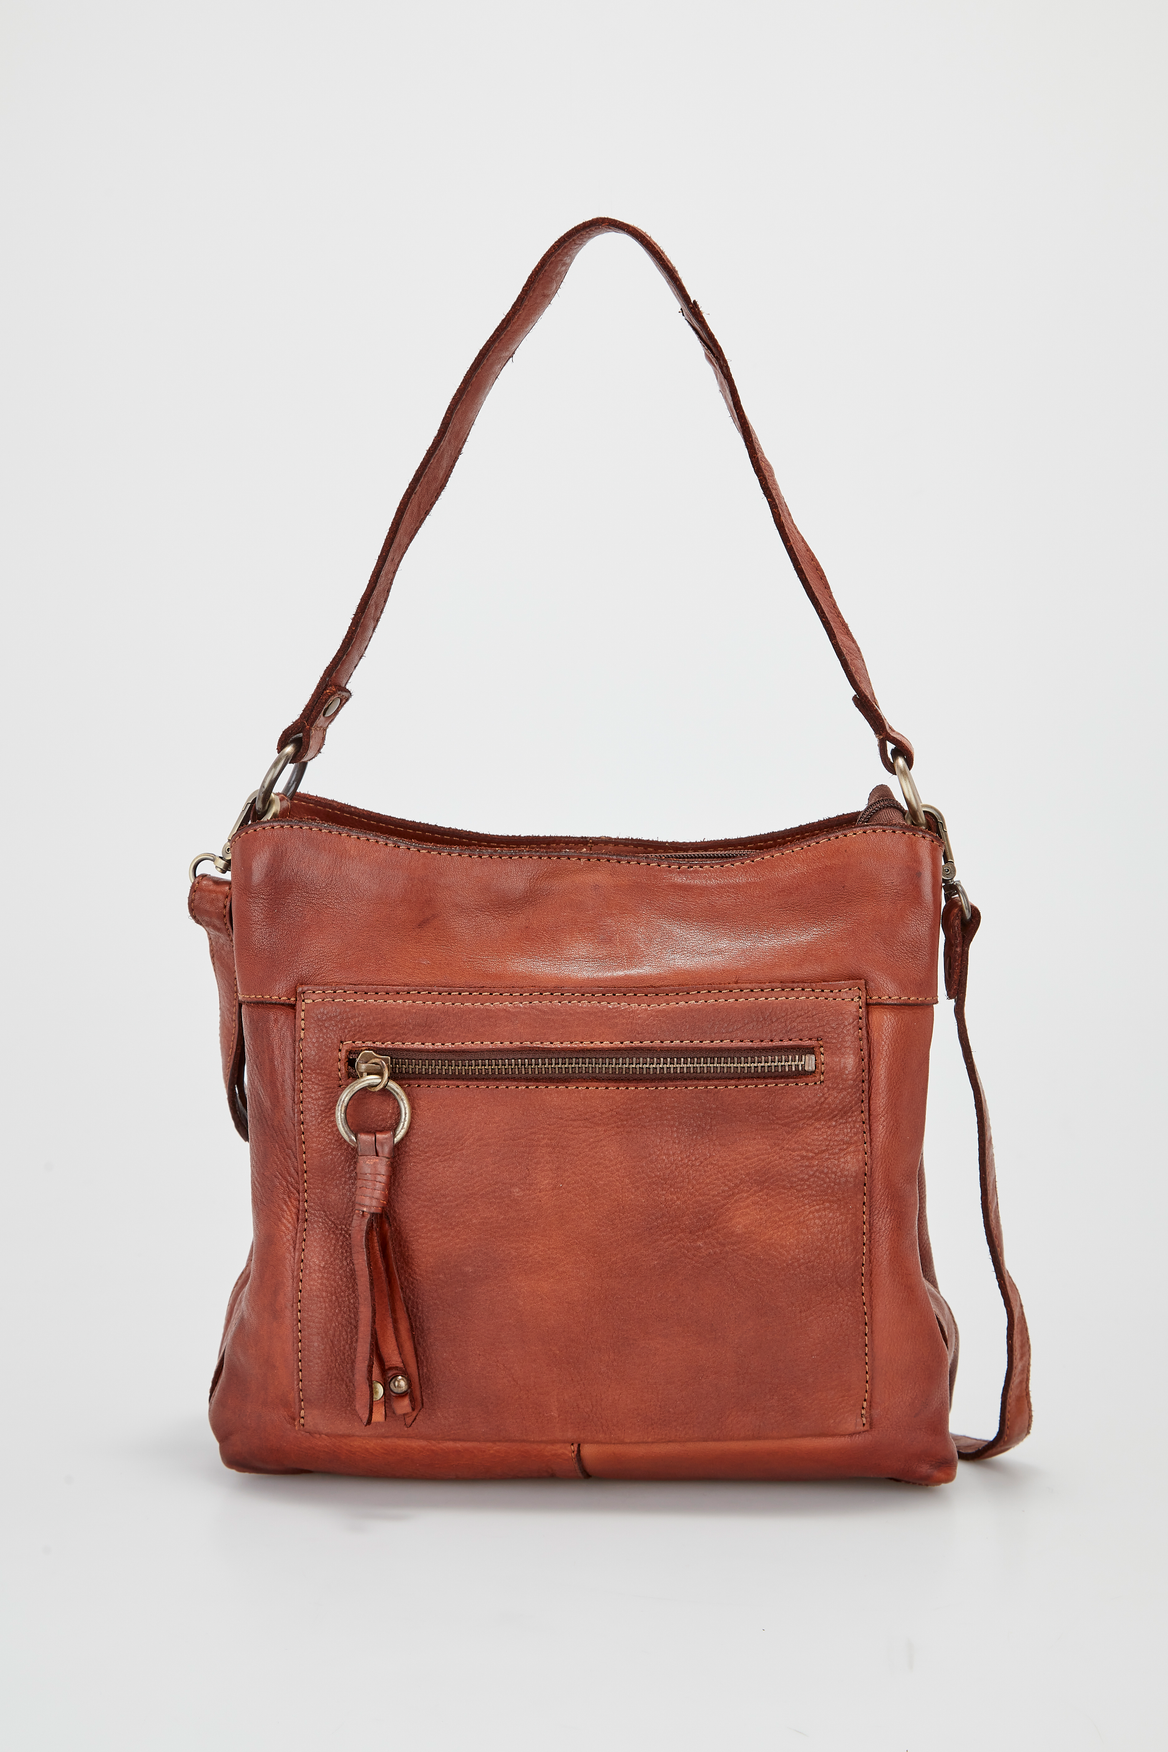 Strandbags Australia Shop Online  Handbags Luggage Backpacks